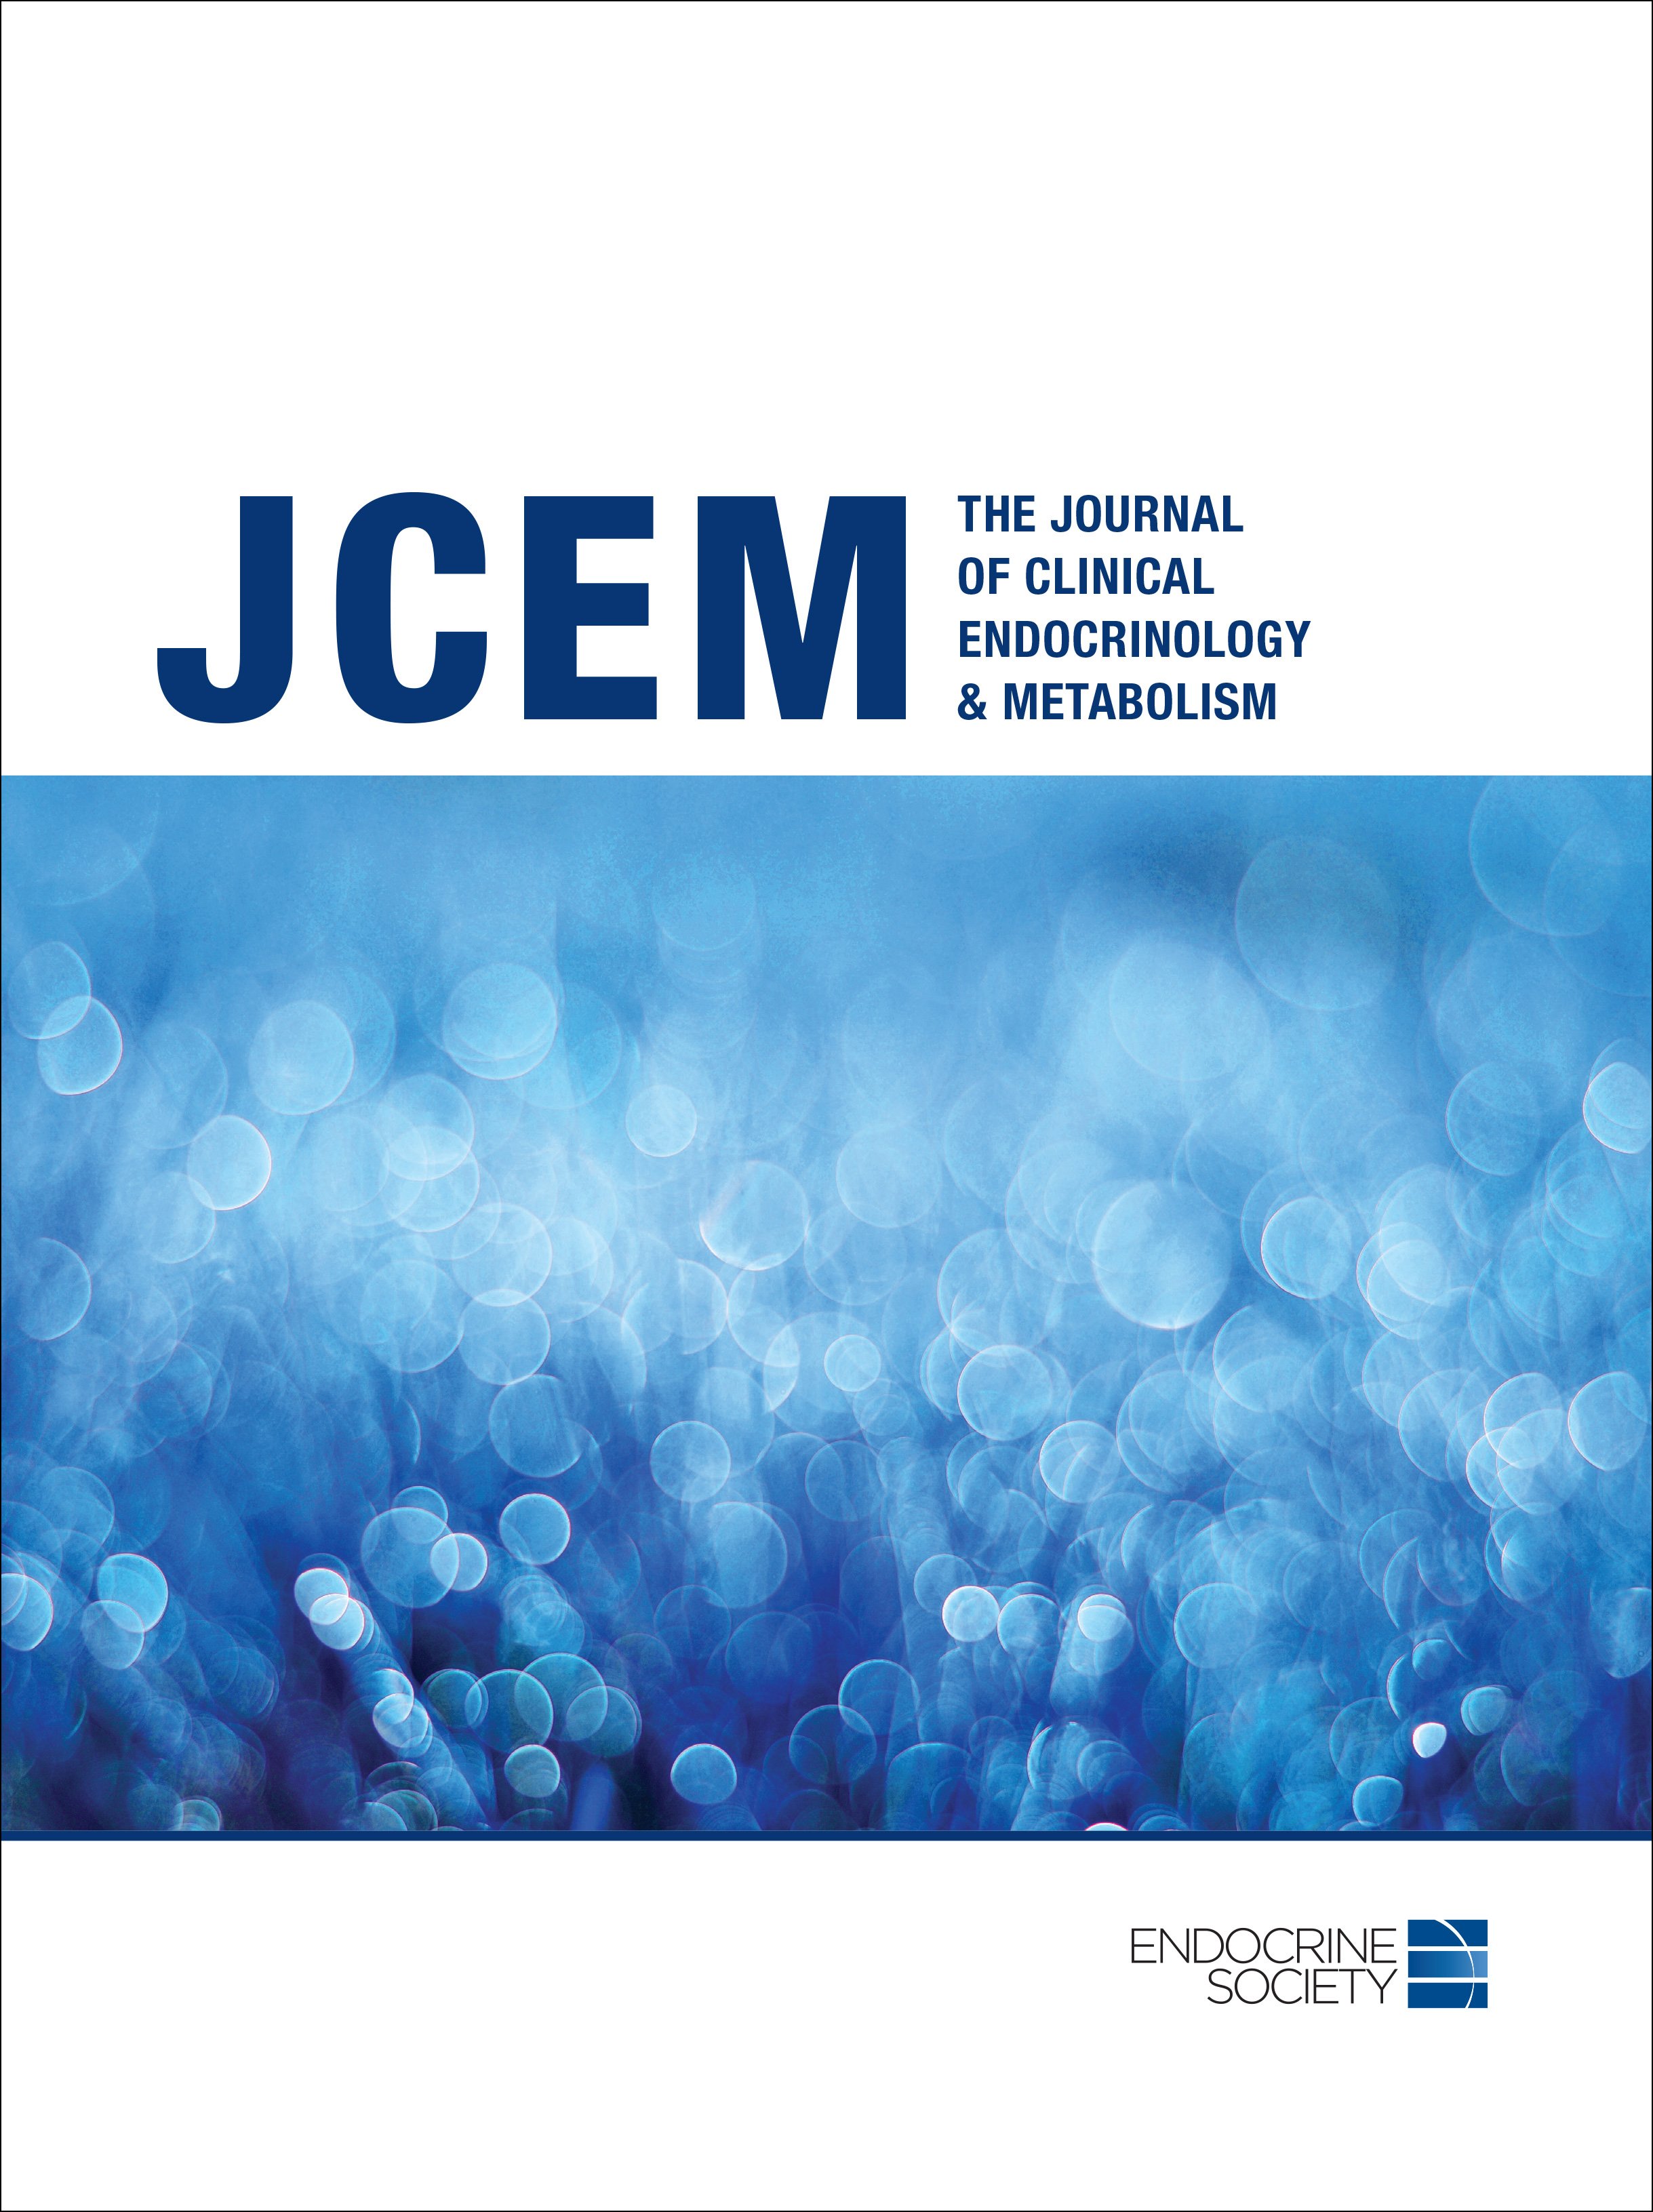 endocrinology diabetes and metabolism journal impact factor)